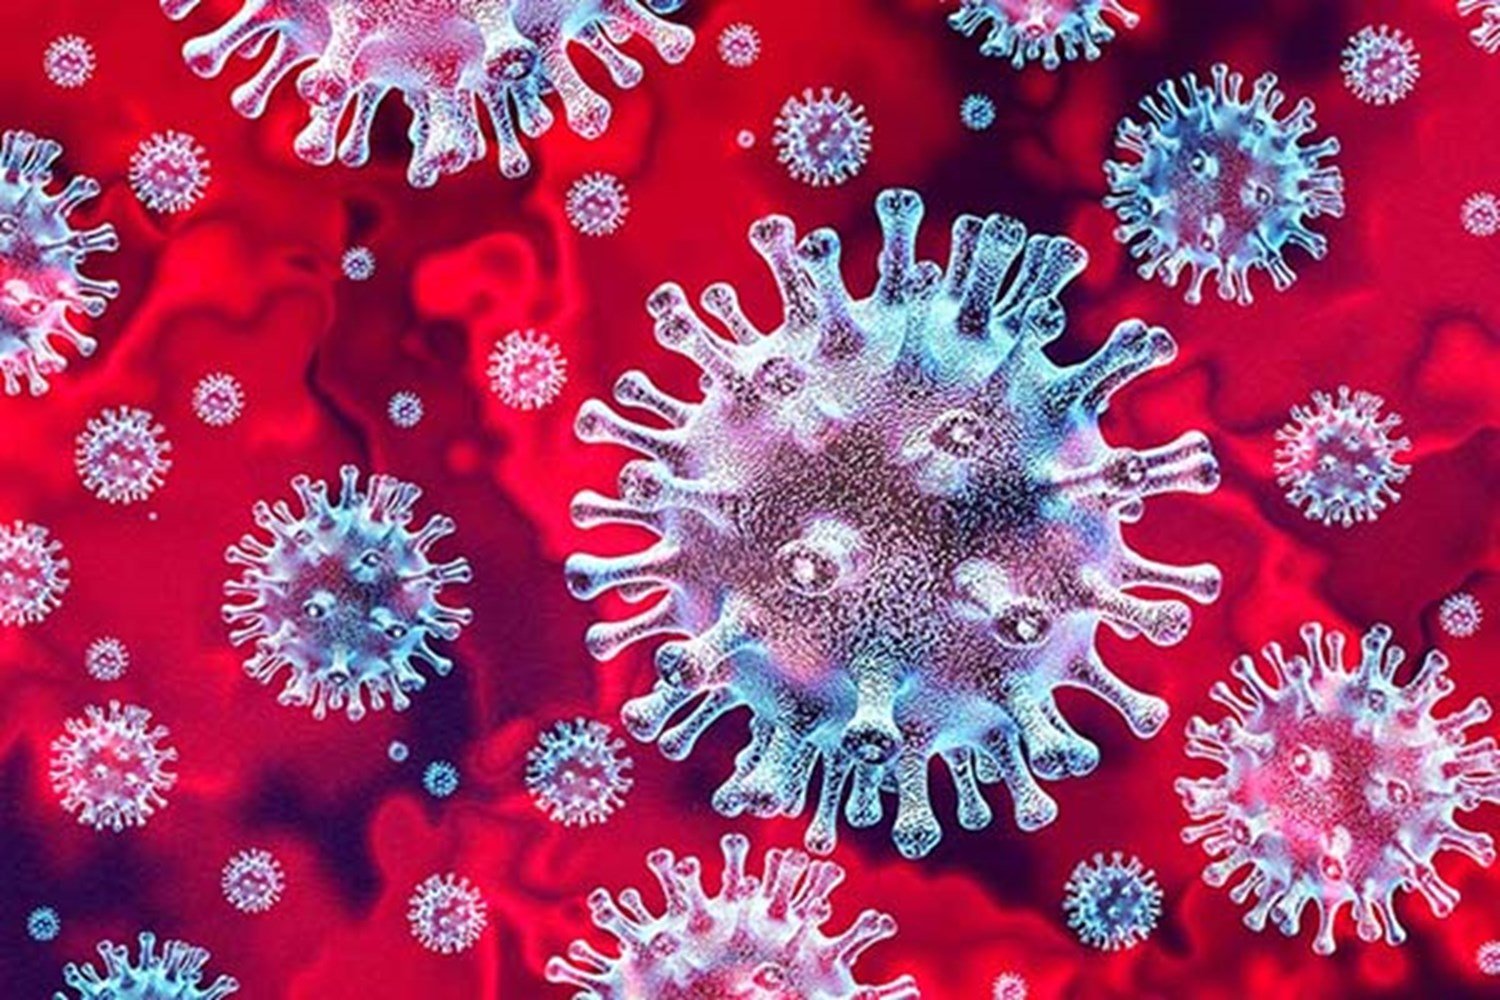 Coronavirus COVID-19 blue molecules on red background